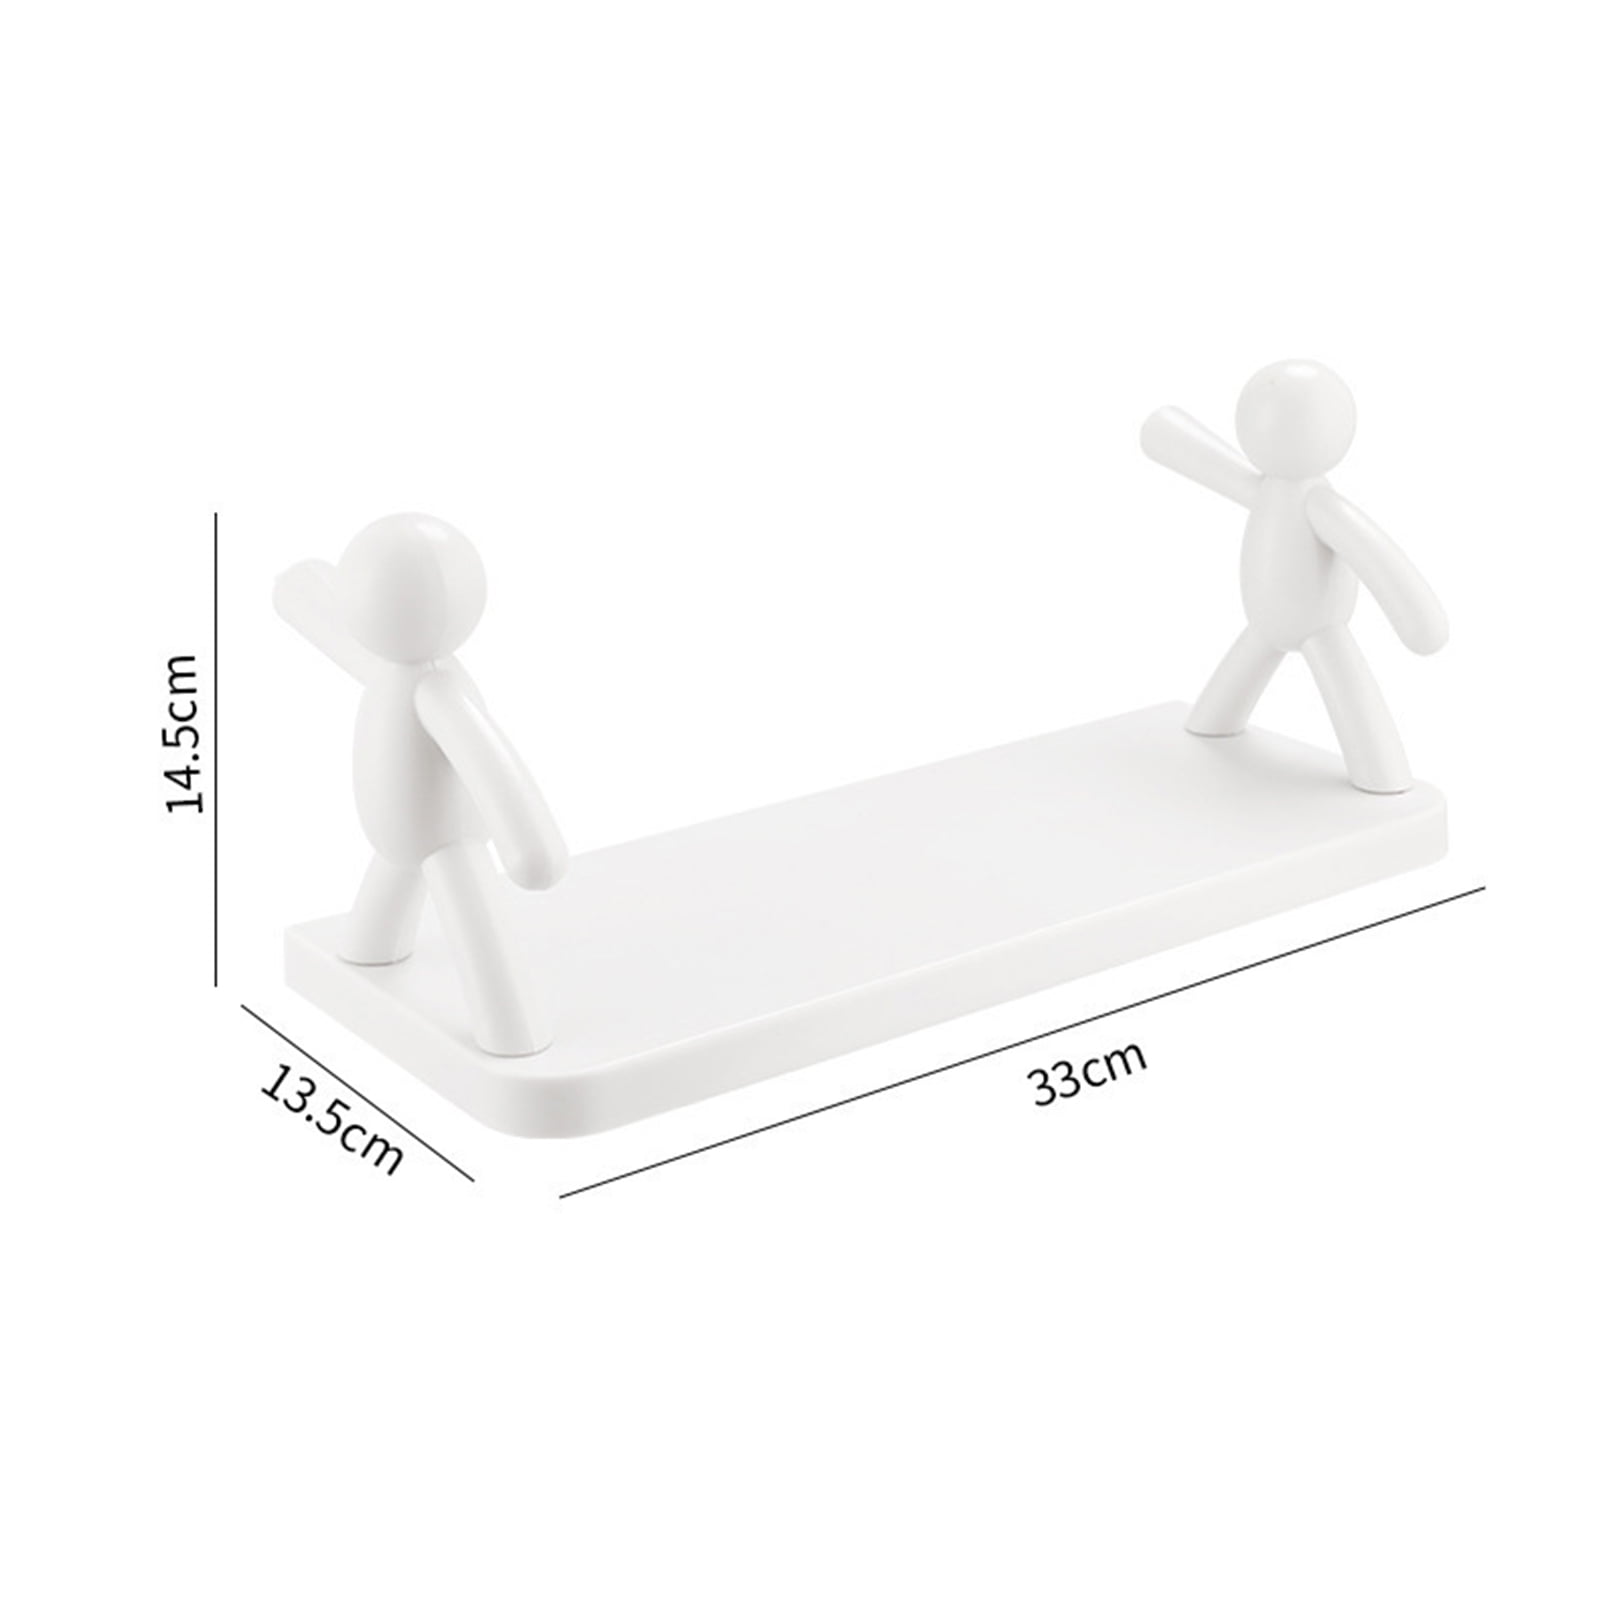 Self-Adhesive Floating Bathroom Shelf [Platform Gen 2] - AT Lifestyle Store